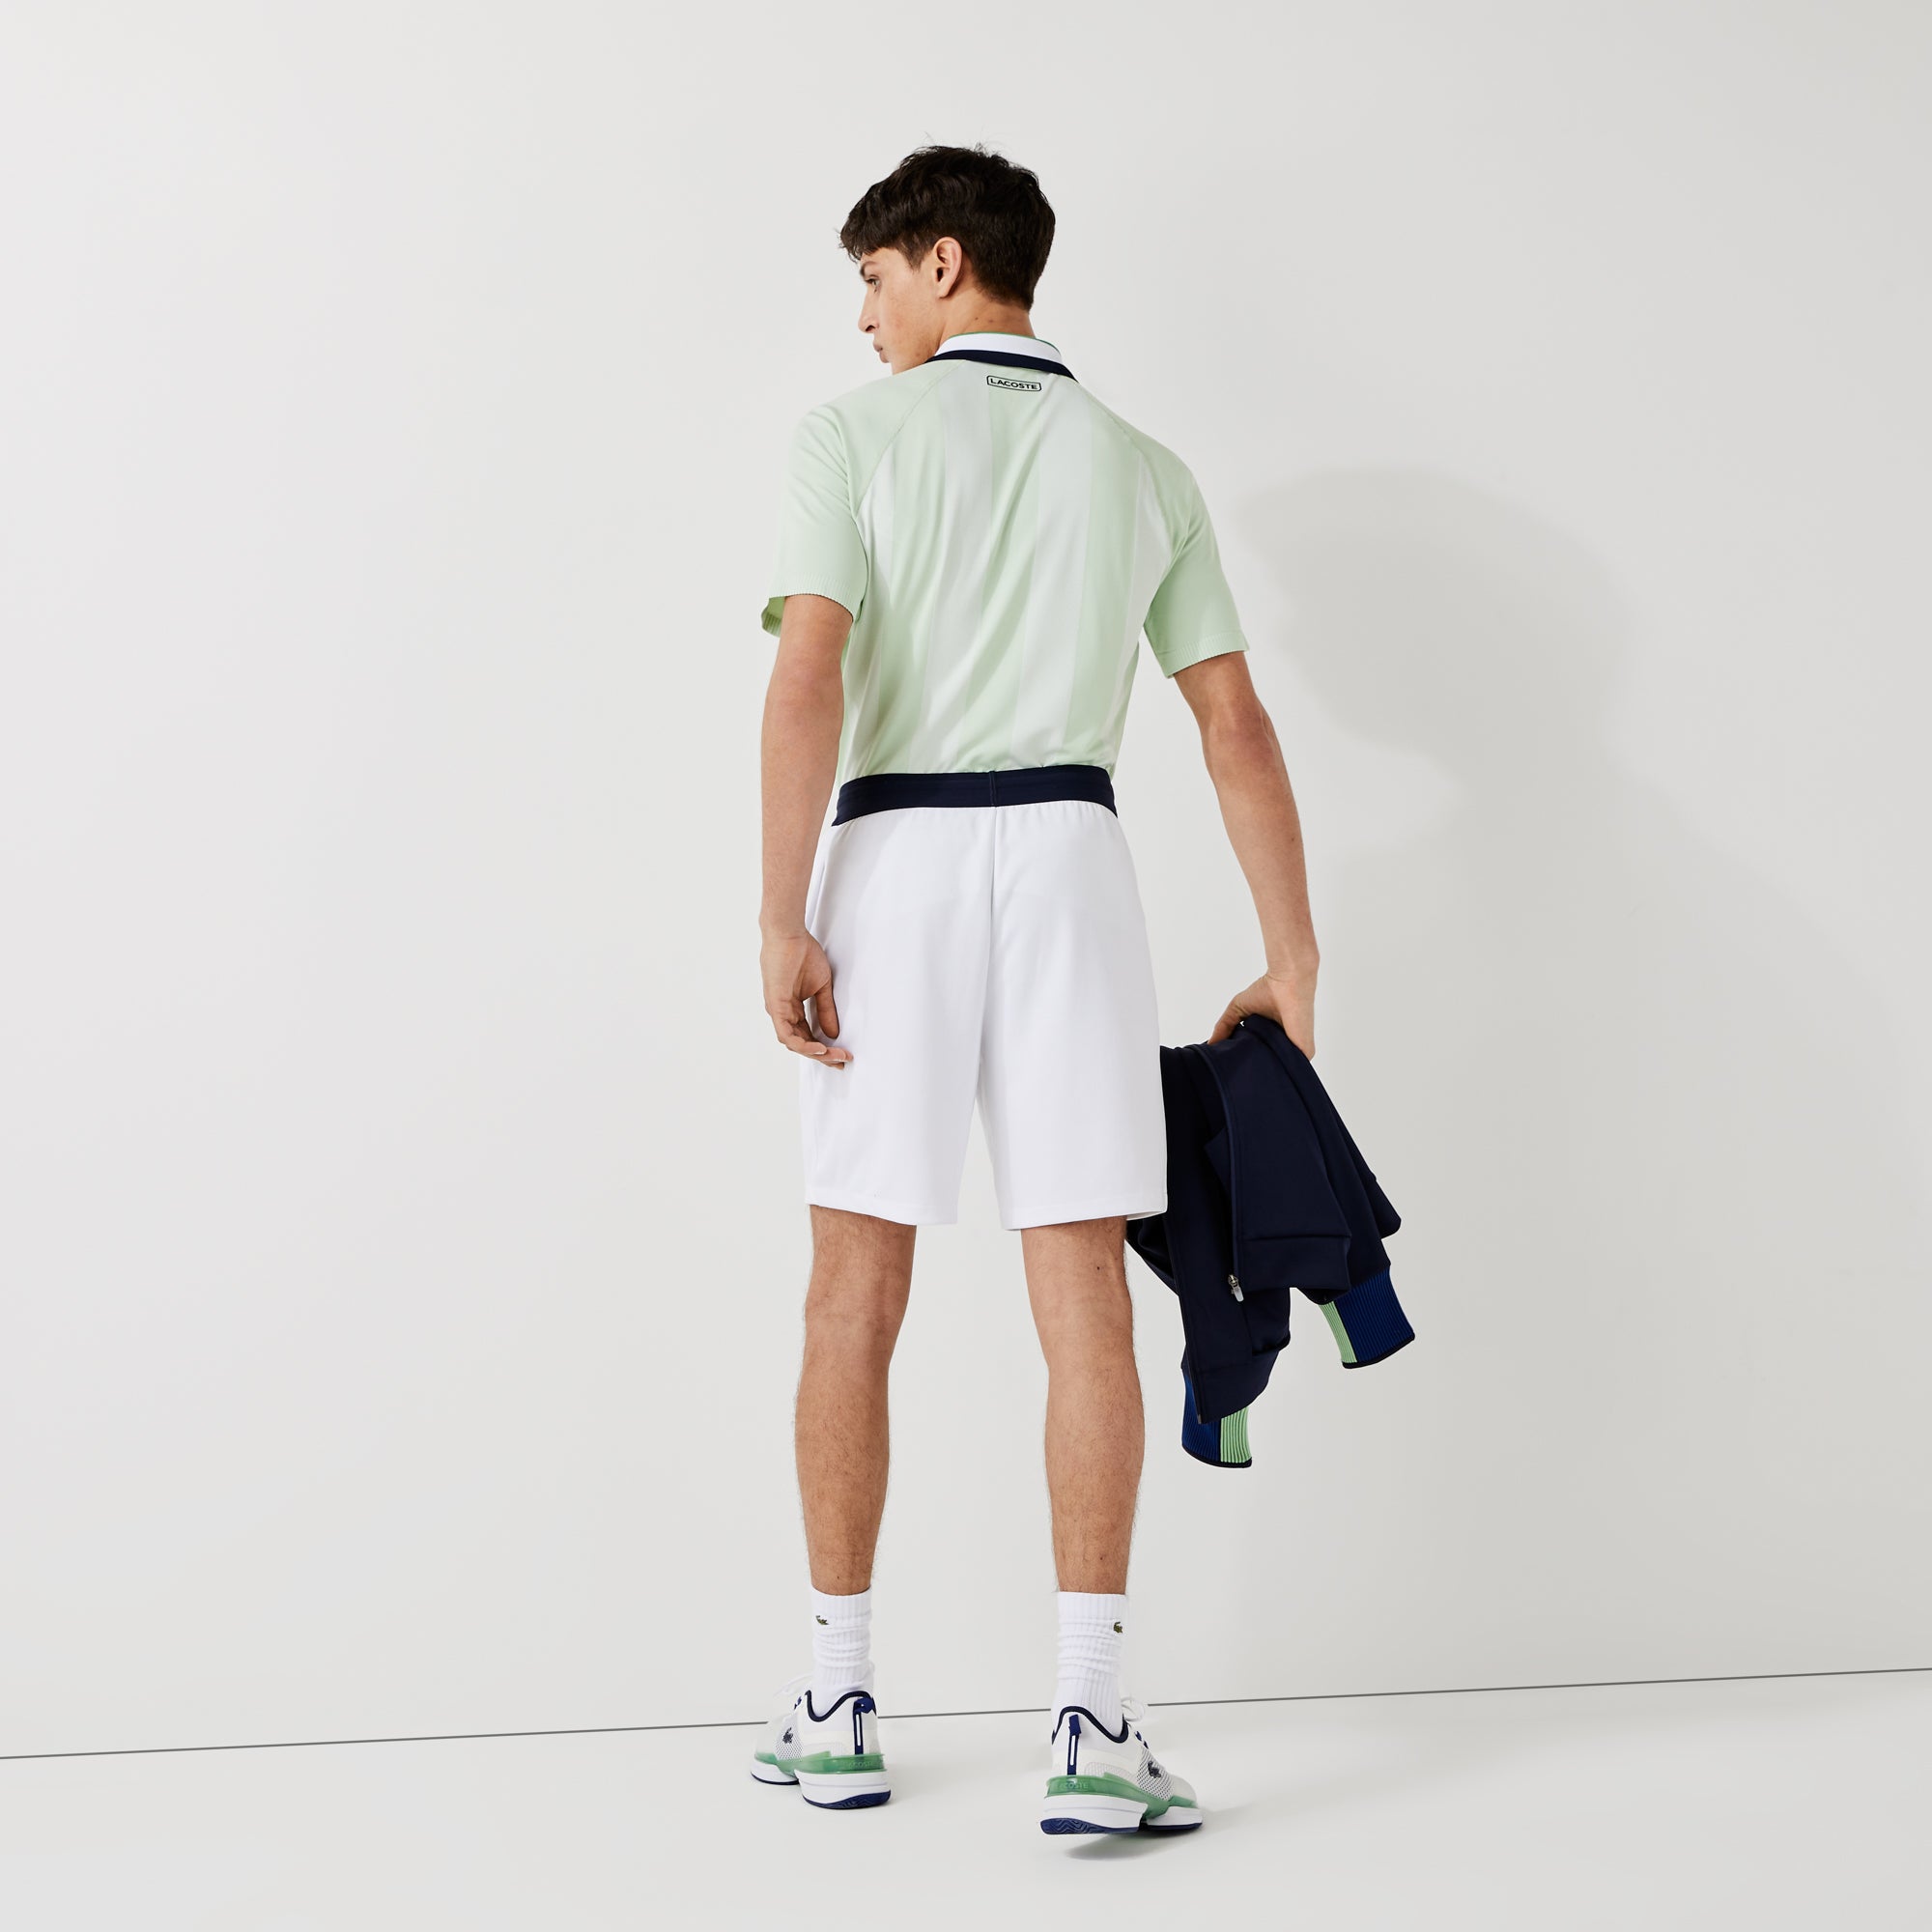 Lacoste Men's Jacquard Tennis Shorts White (2)